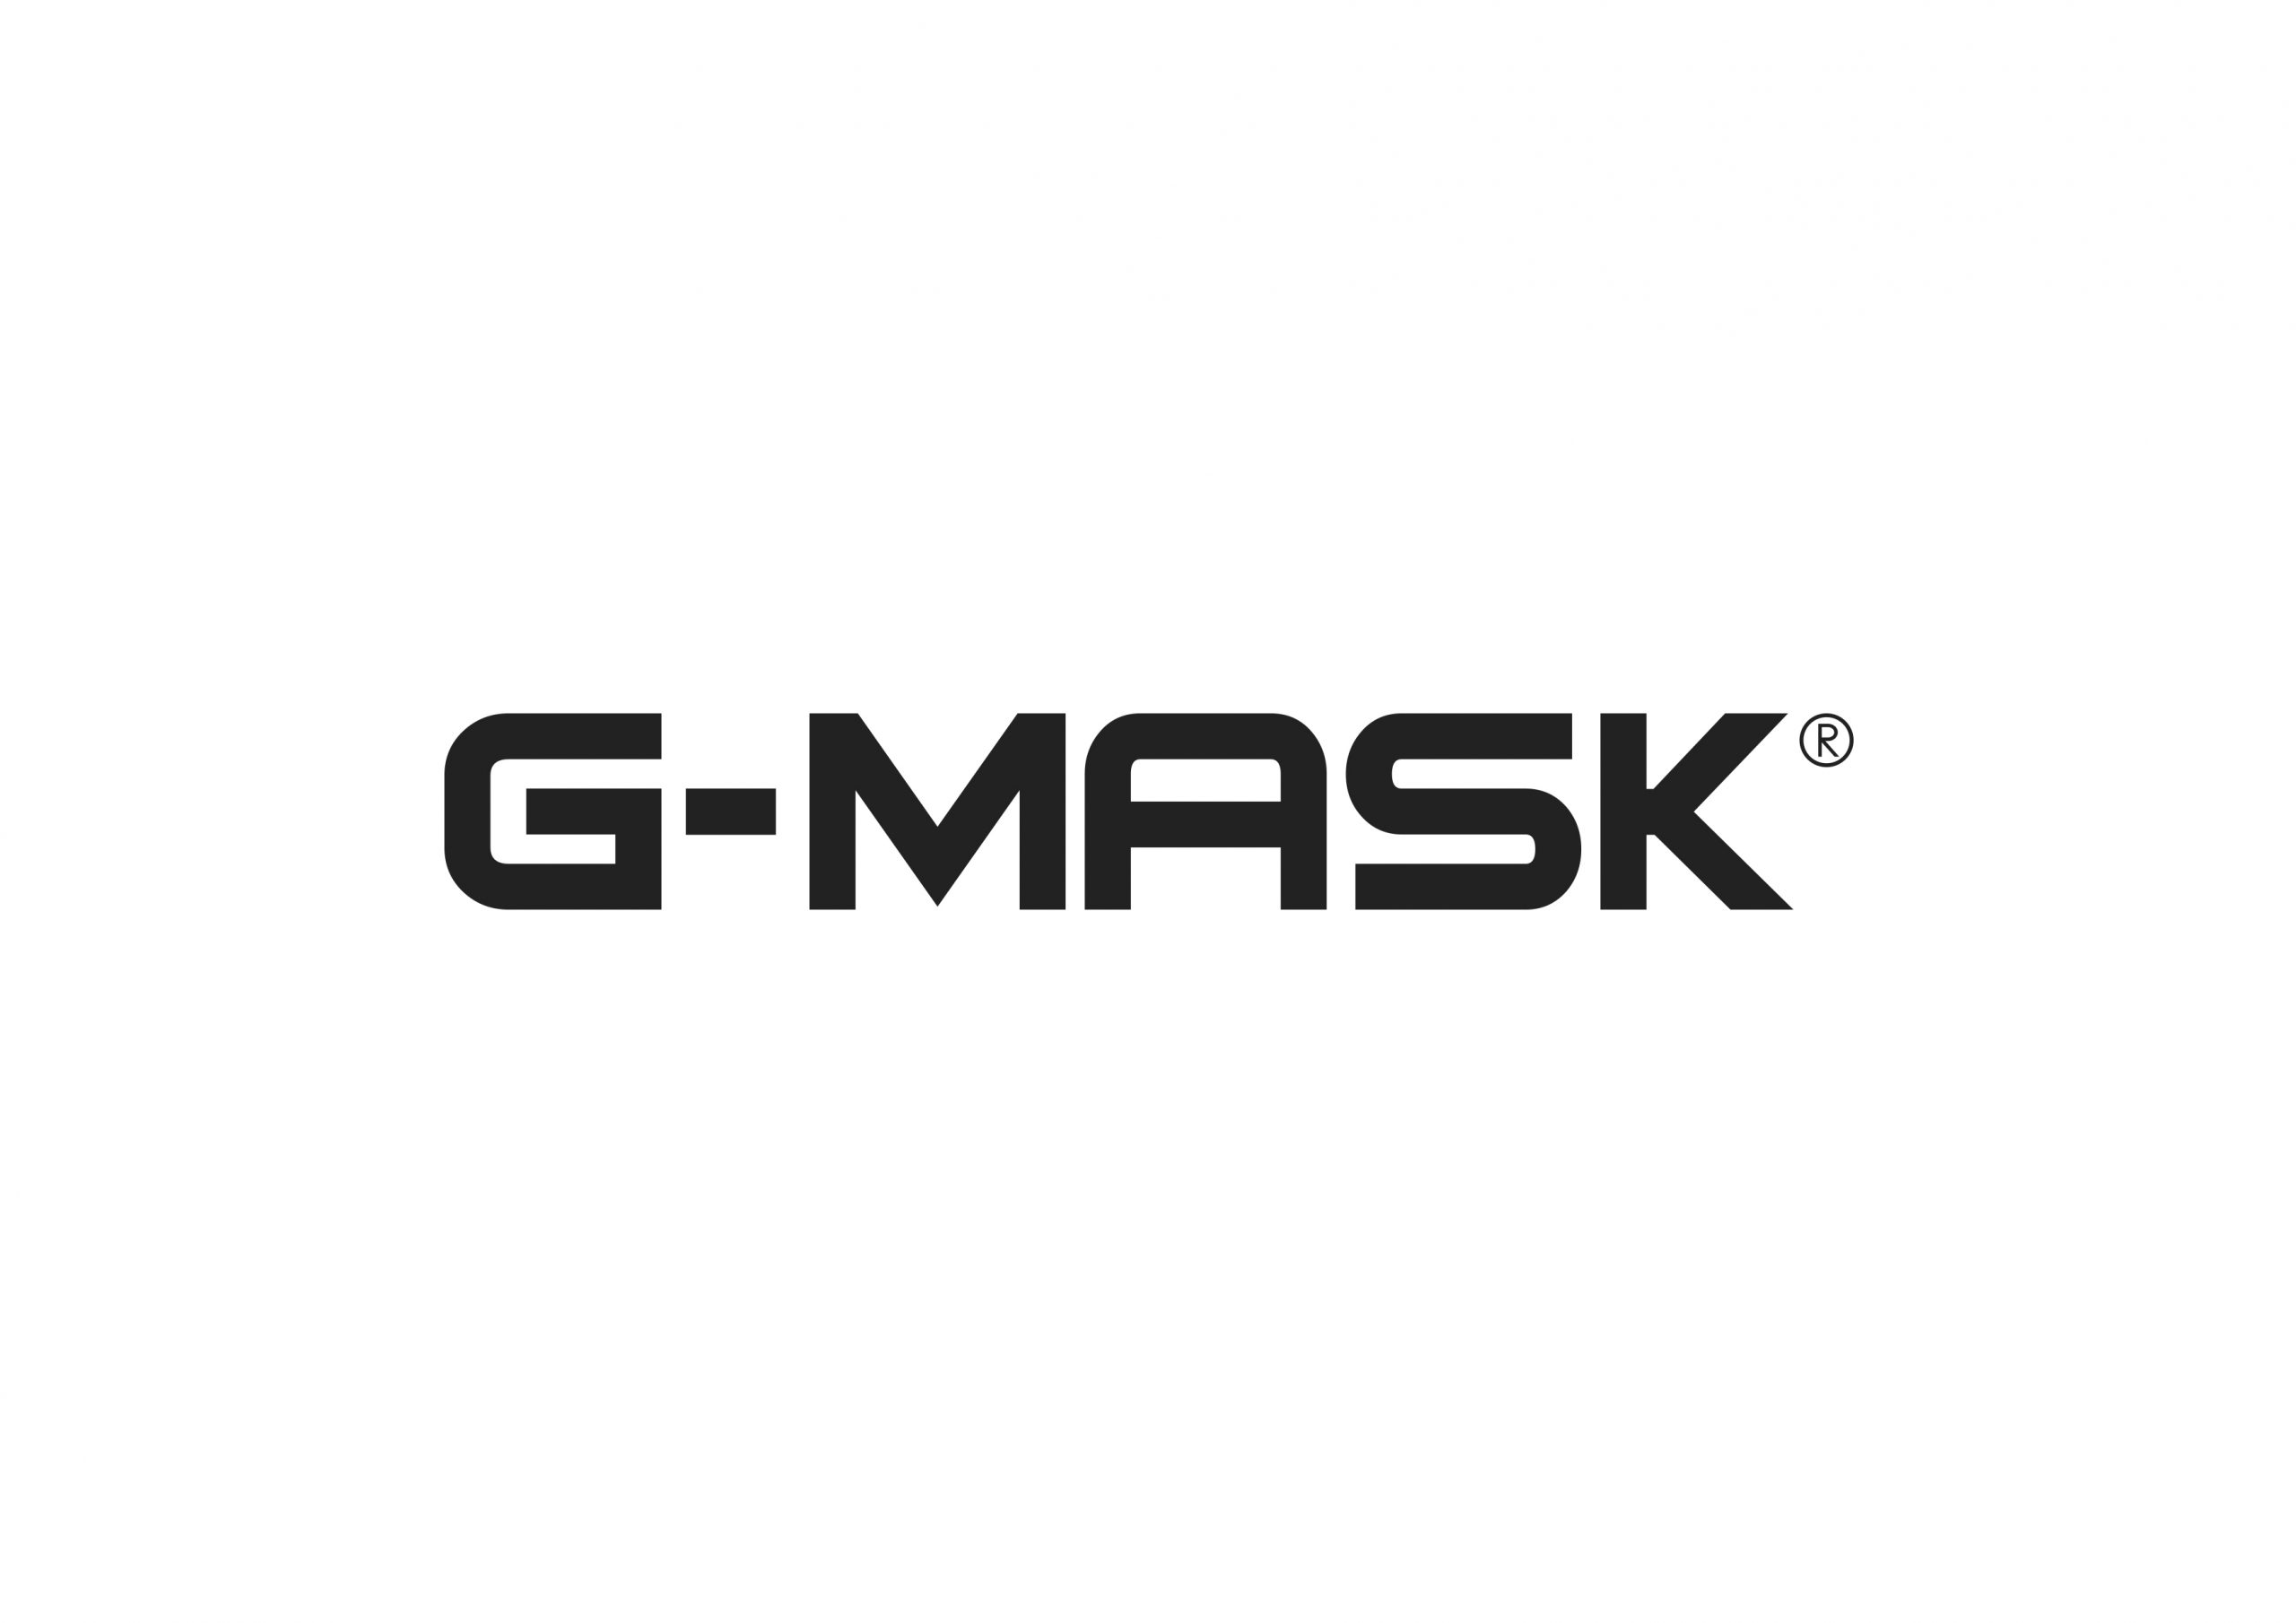 logo G-MASK. Registred trademark